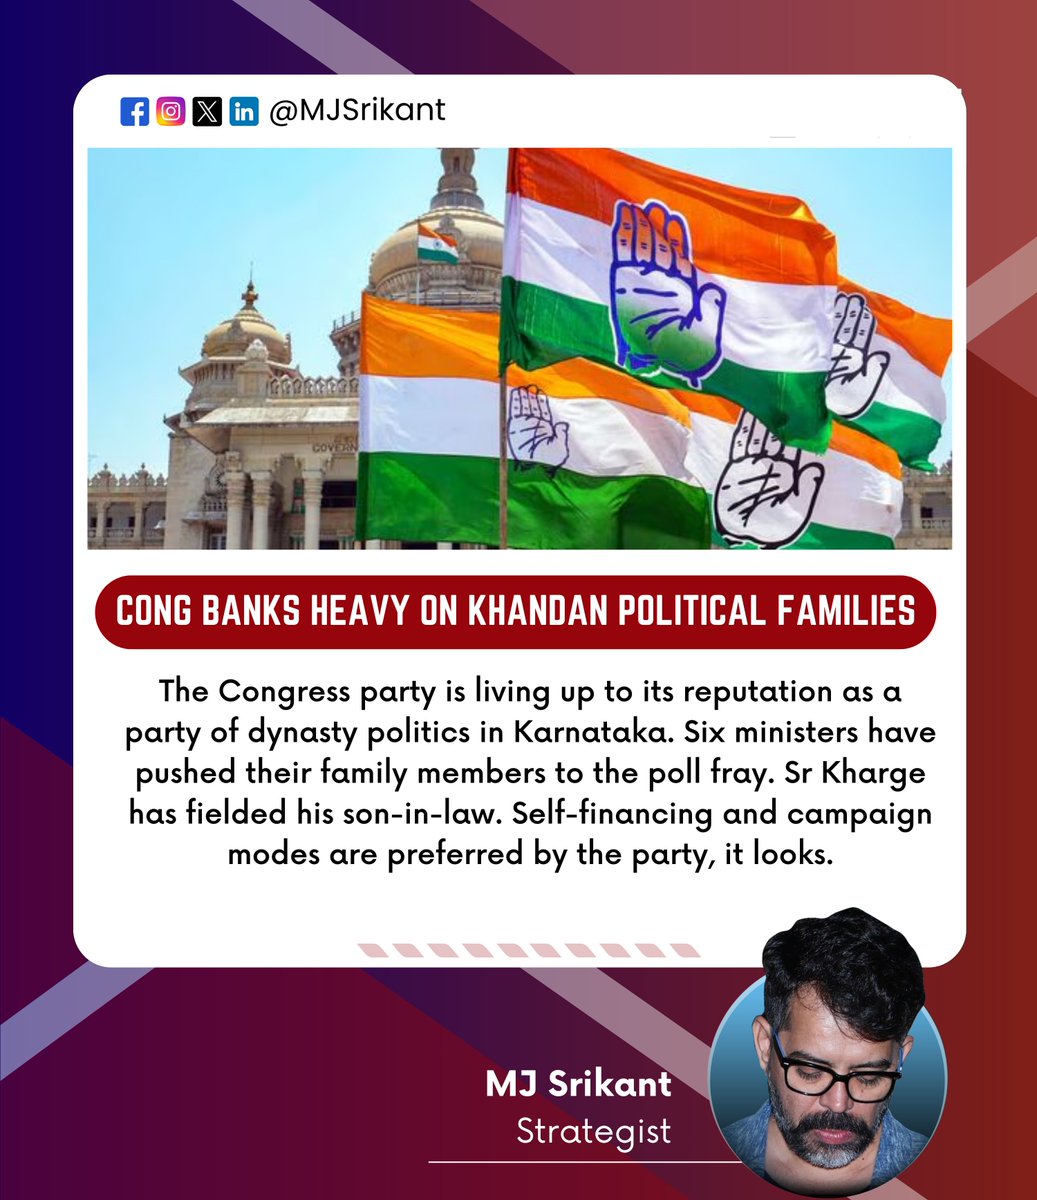 Cong banks heavy on khandan political families 

-#Congress #DynastyPolitics #Karnataka #SrKharge #FamilyPolitics #PoliticalDynasty #Elections #CampaignFinance #Nepotism #PartyPolitics